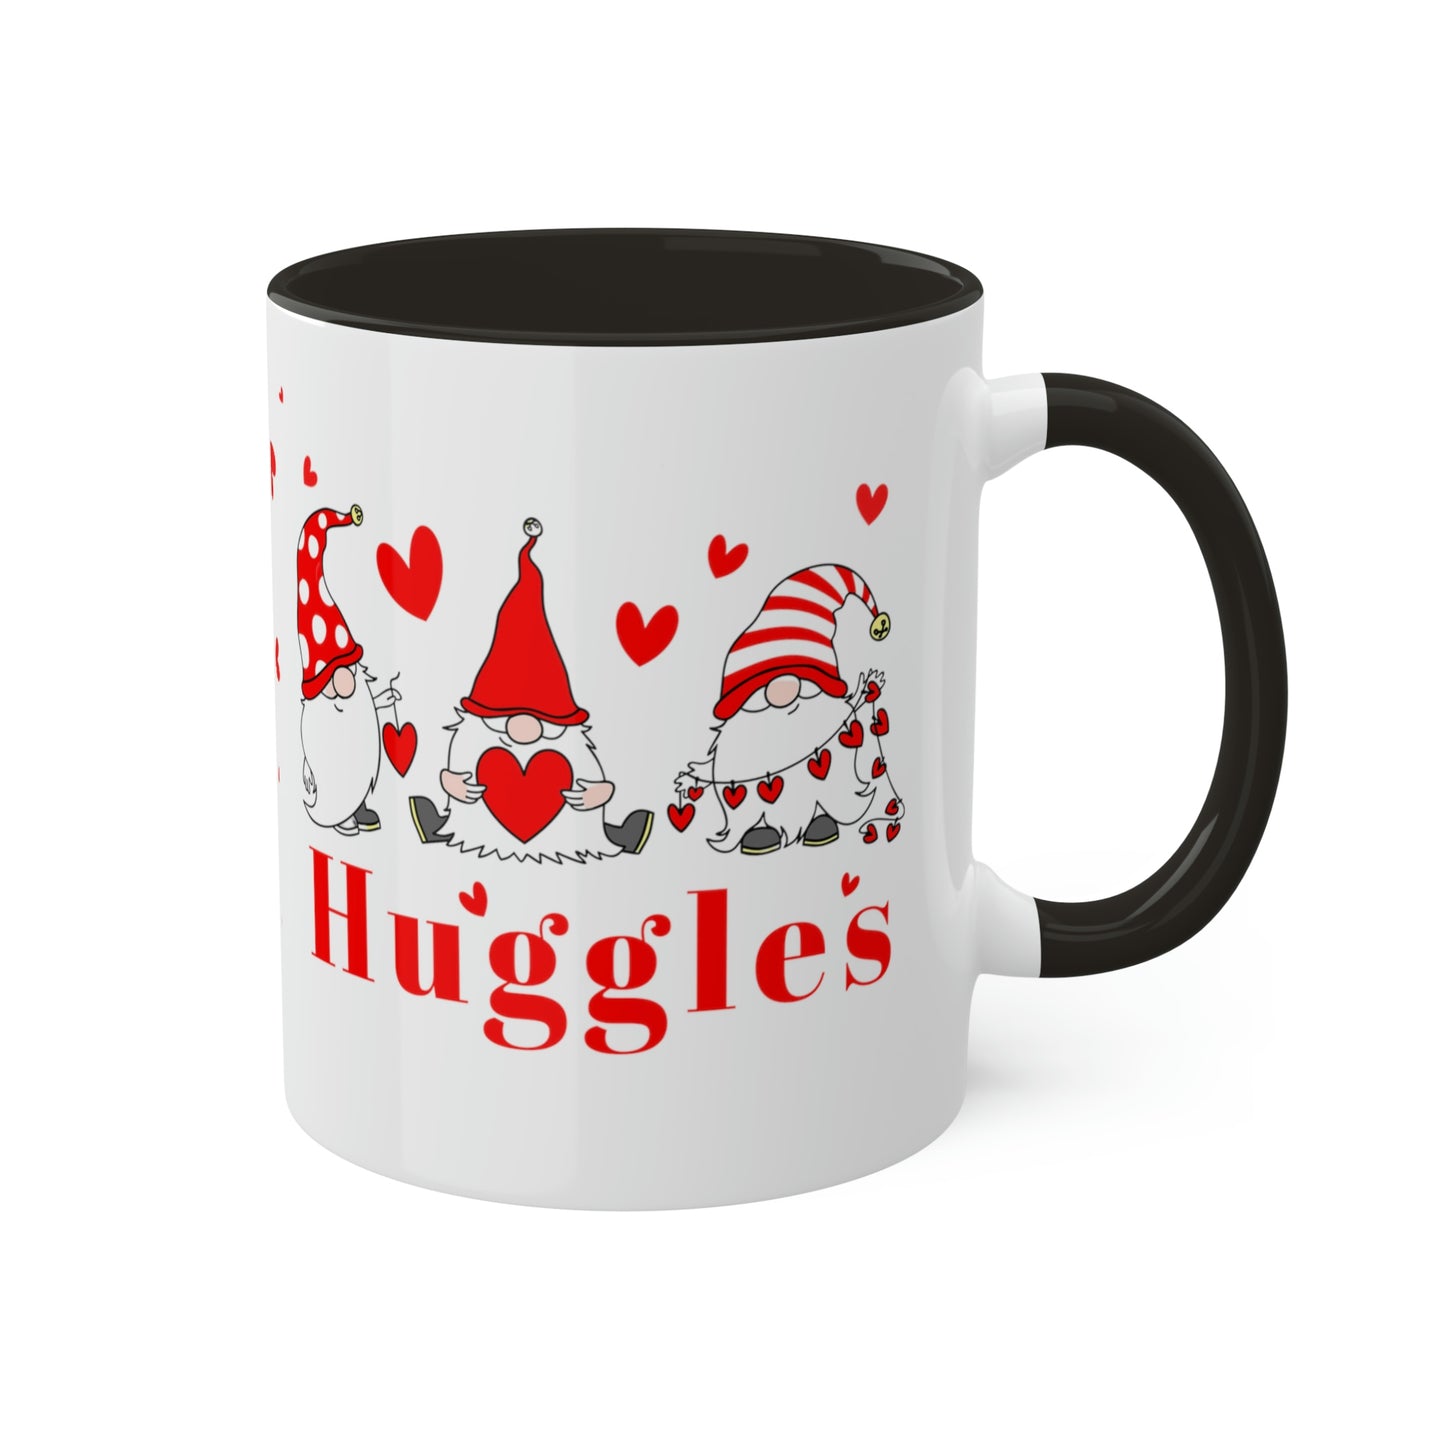 Gnomes Huggles - Colorful Mugs, 11oz